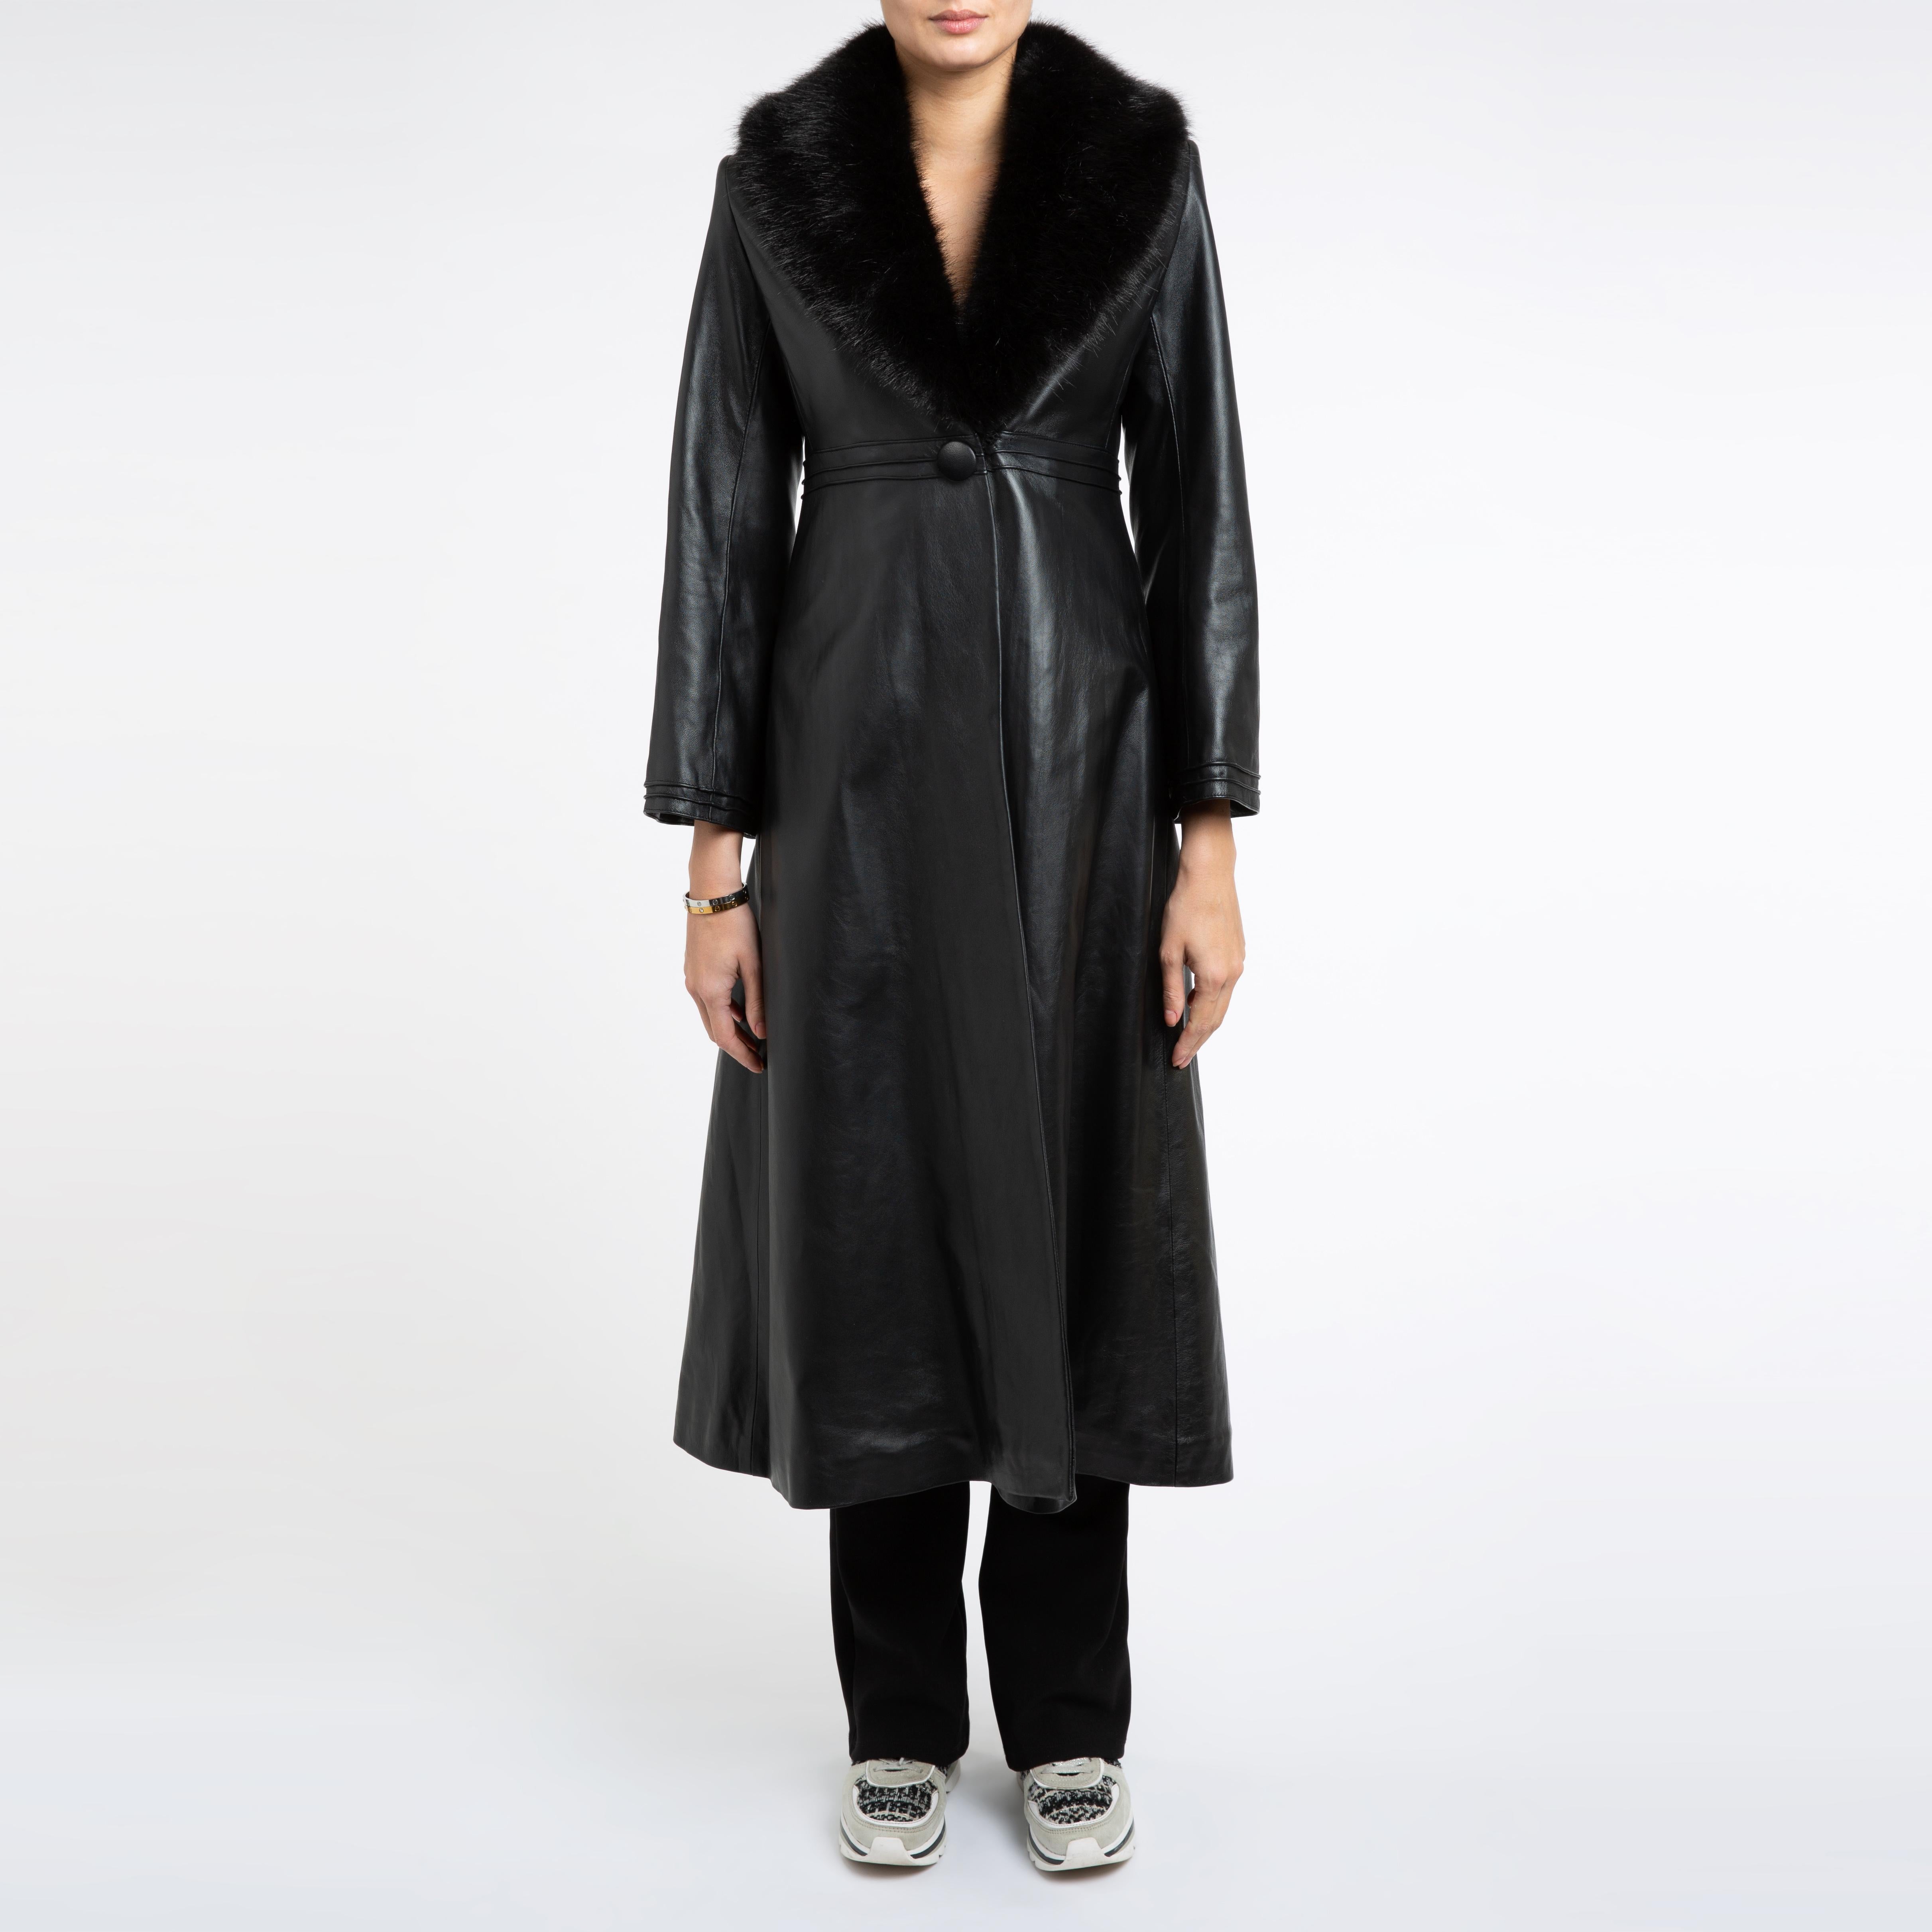 Verheyen London Edward Leather Coat with Faux Fur Collar in Black - Size uk 10 For Sale 12